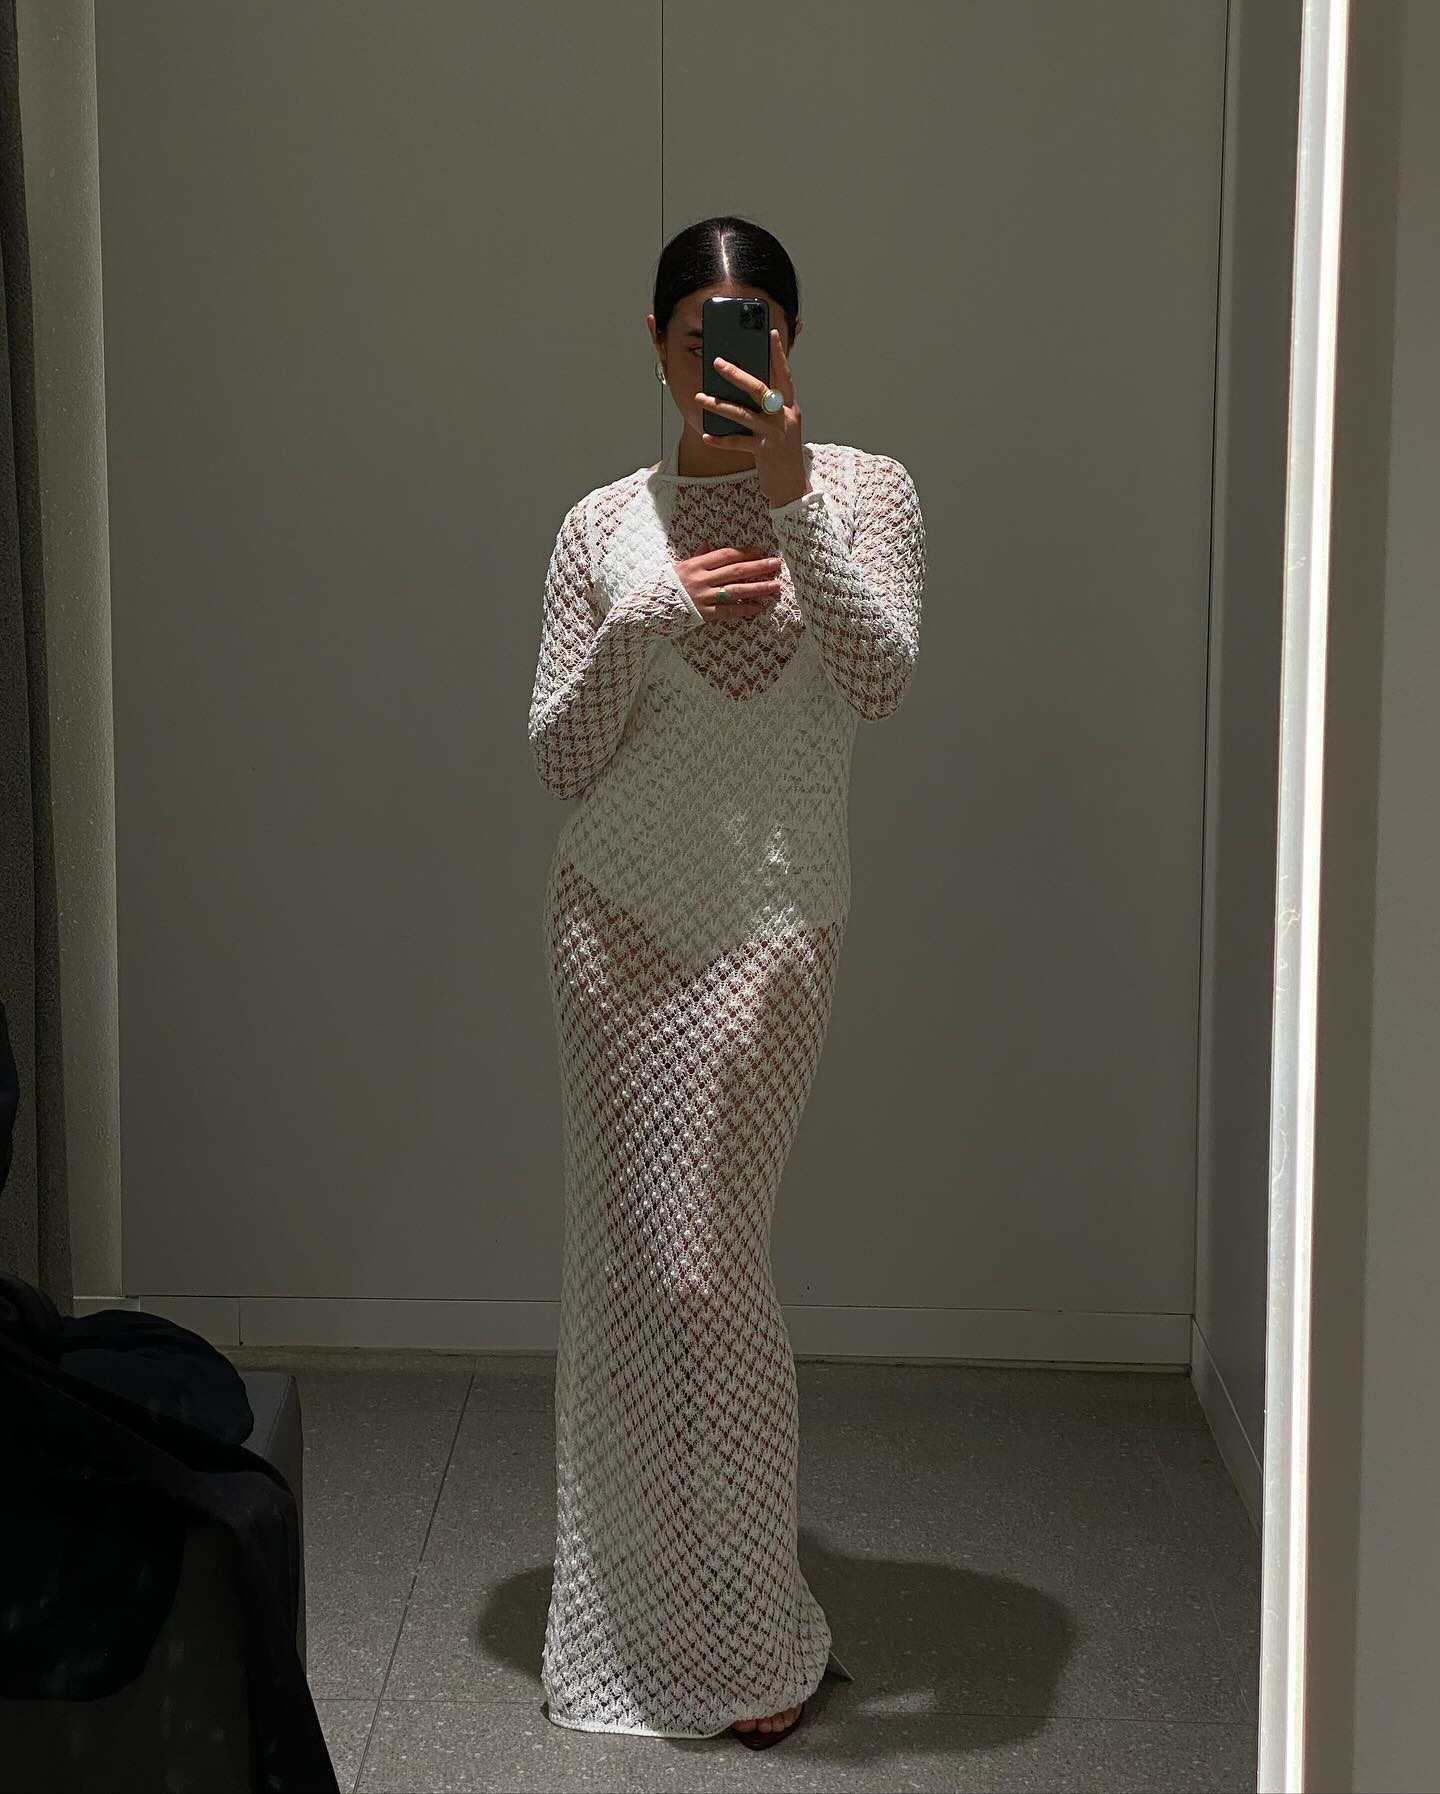 Sasha Mei wearing a sheer crochet maxi dress from Victoria Beckham x Mango.